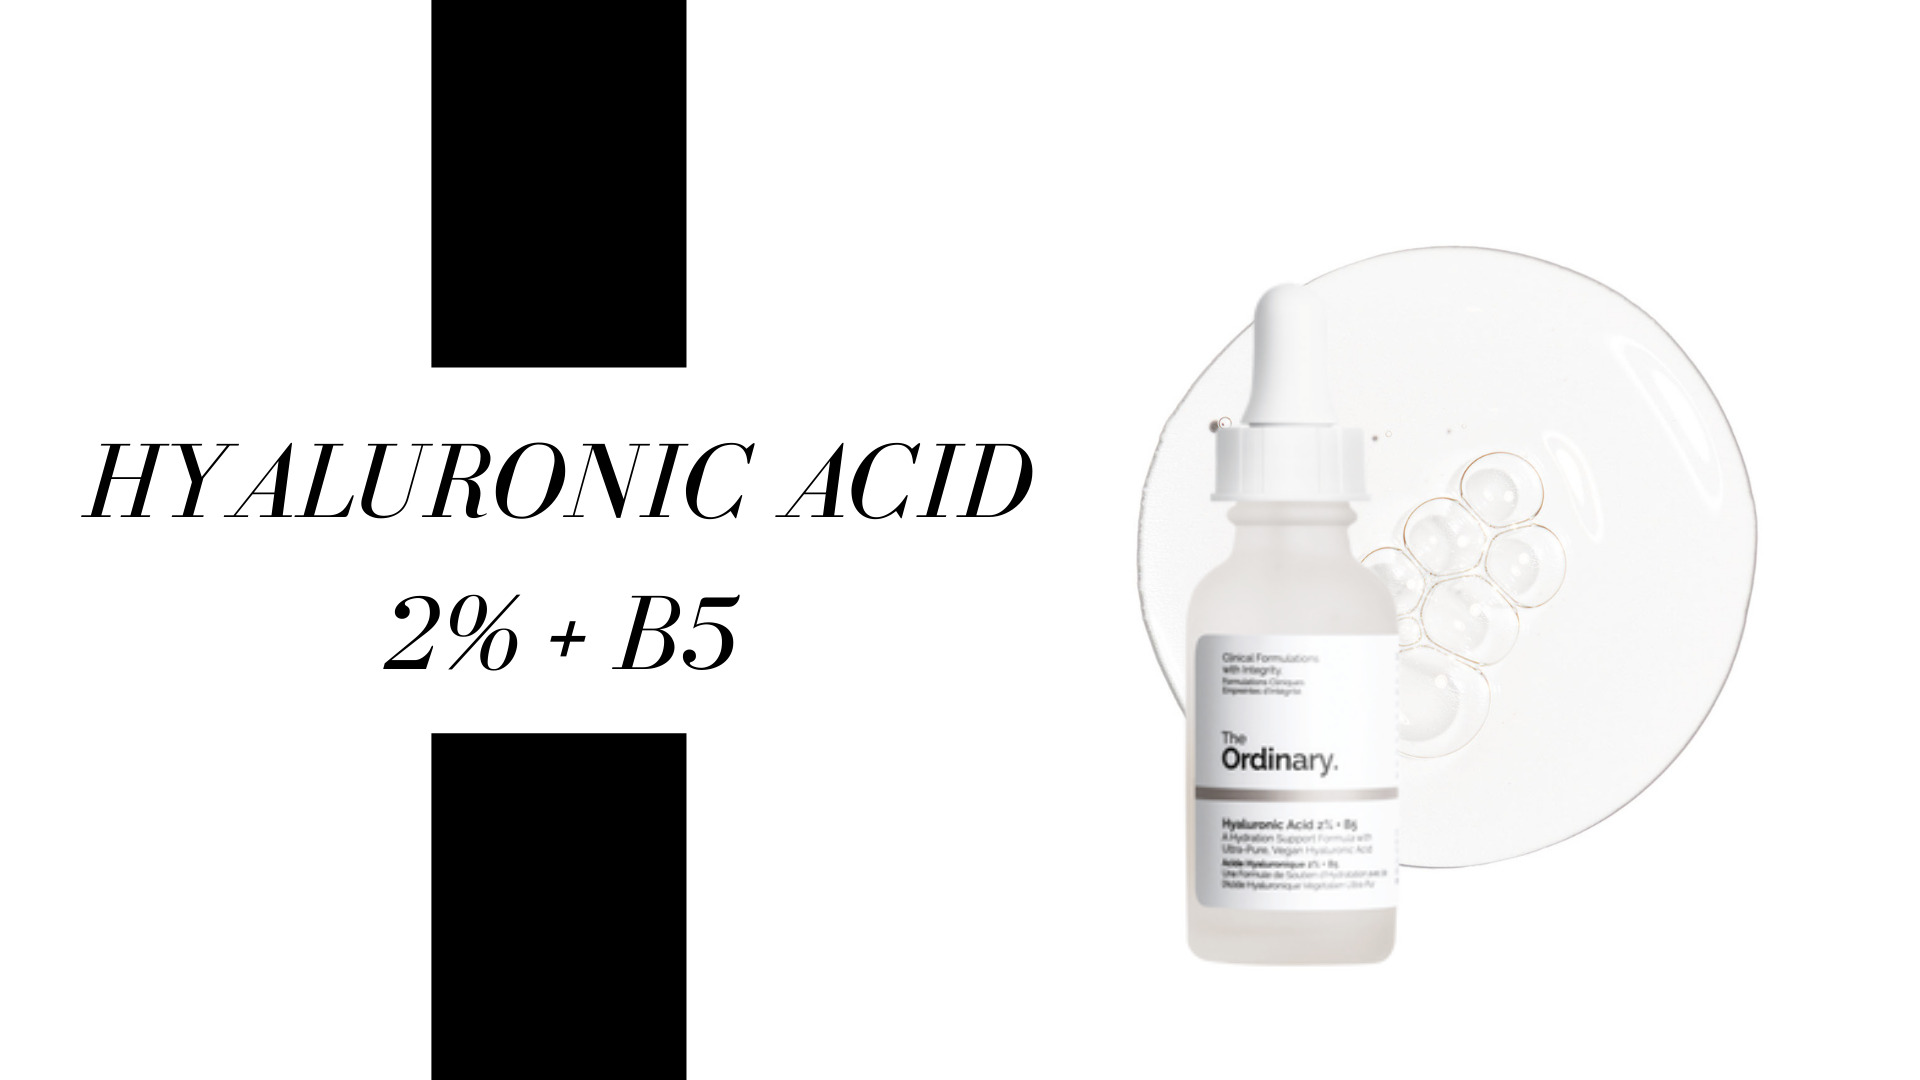 the ordinary skincare hyaluronic acid 2 b5